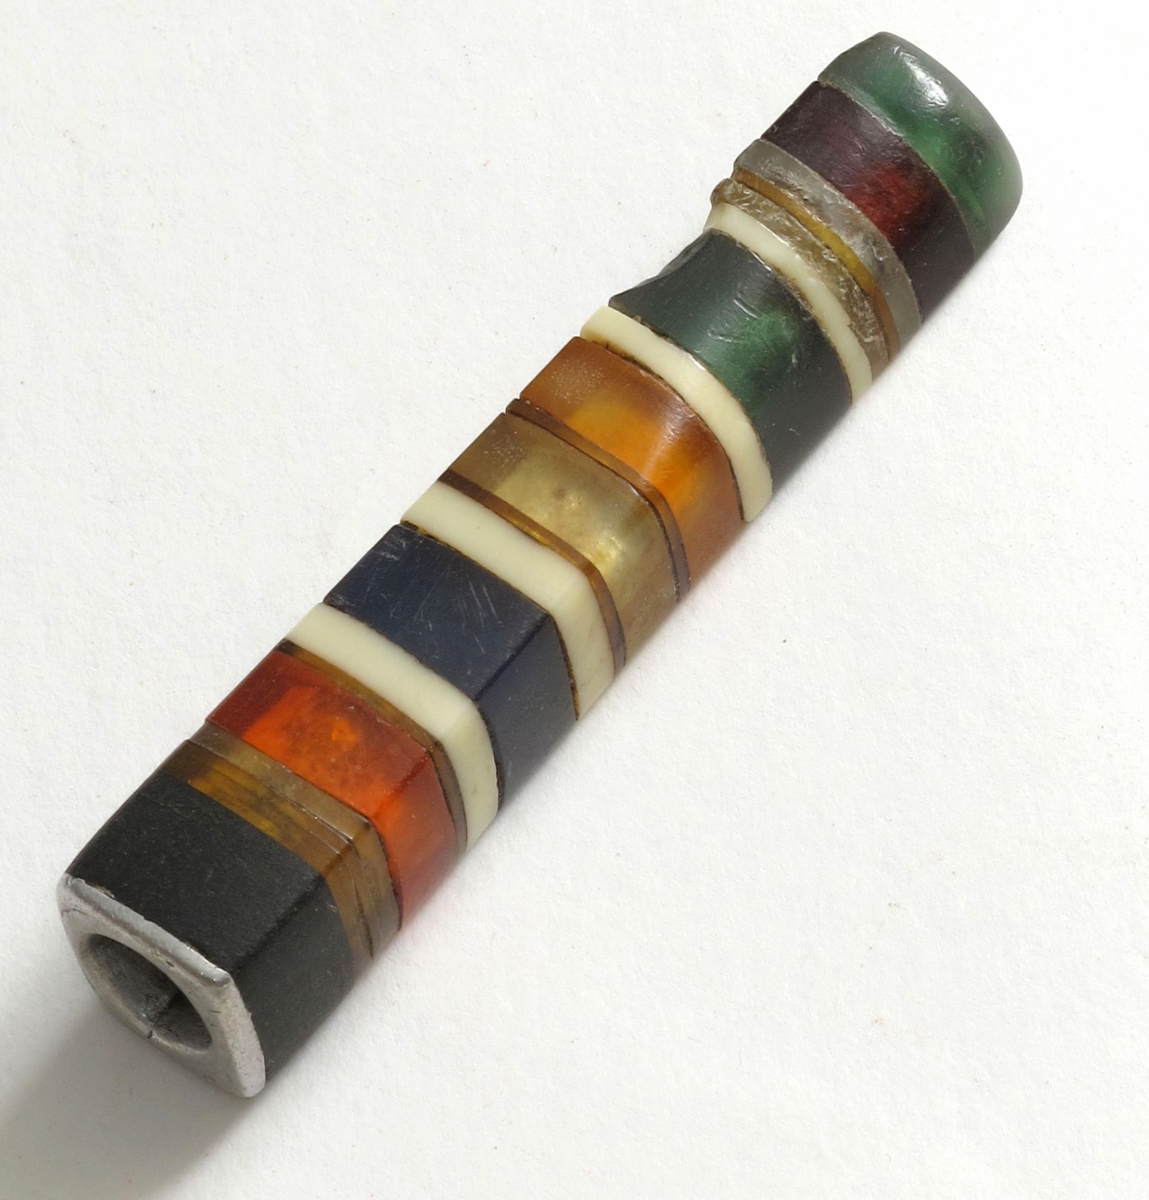 Striper i ulike farger.